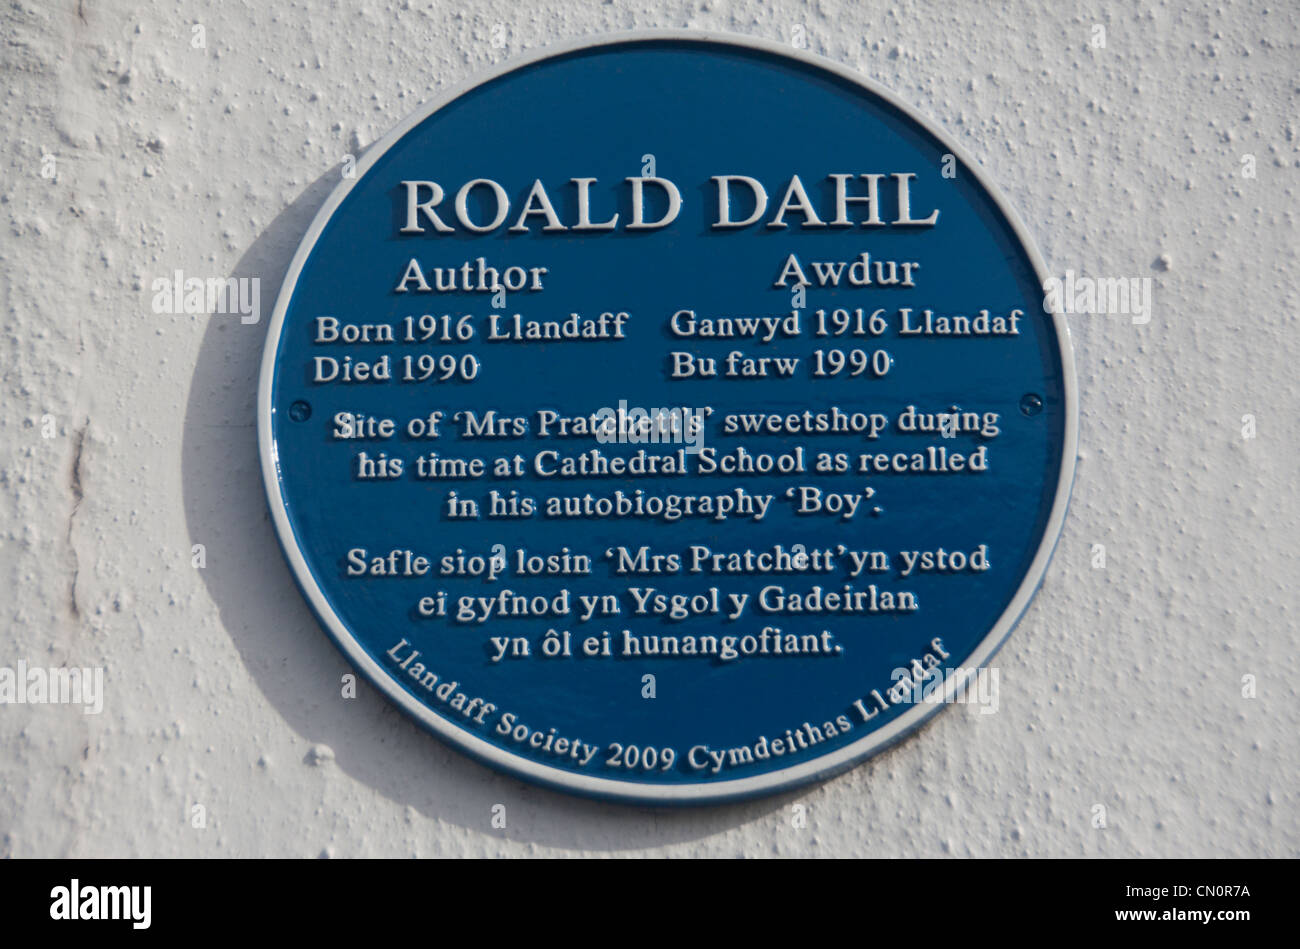 Roald Dahl blue plaque marking site of Mrs Pratchett's sweetshop (from his autobiography 'Boy') Llandaff Cardiff Wales UK Stock Photo